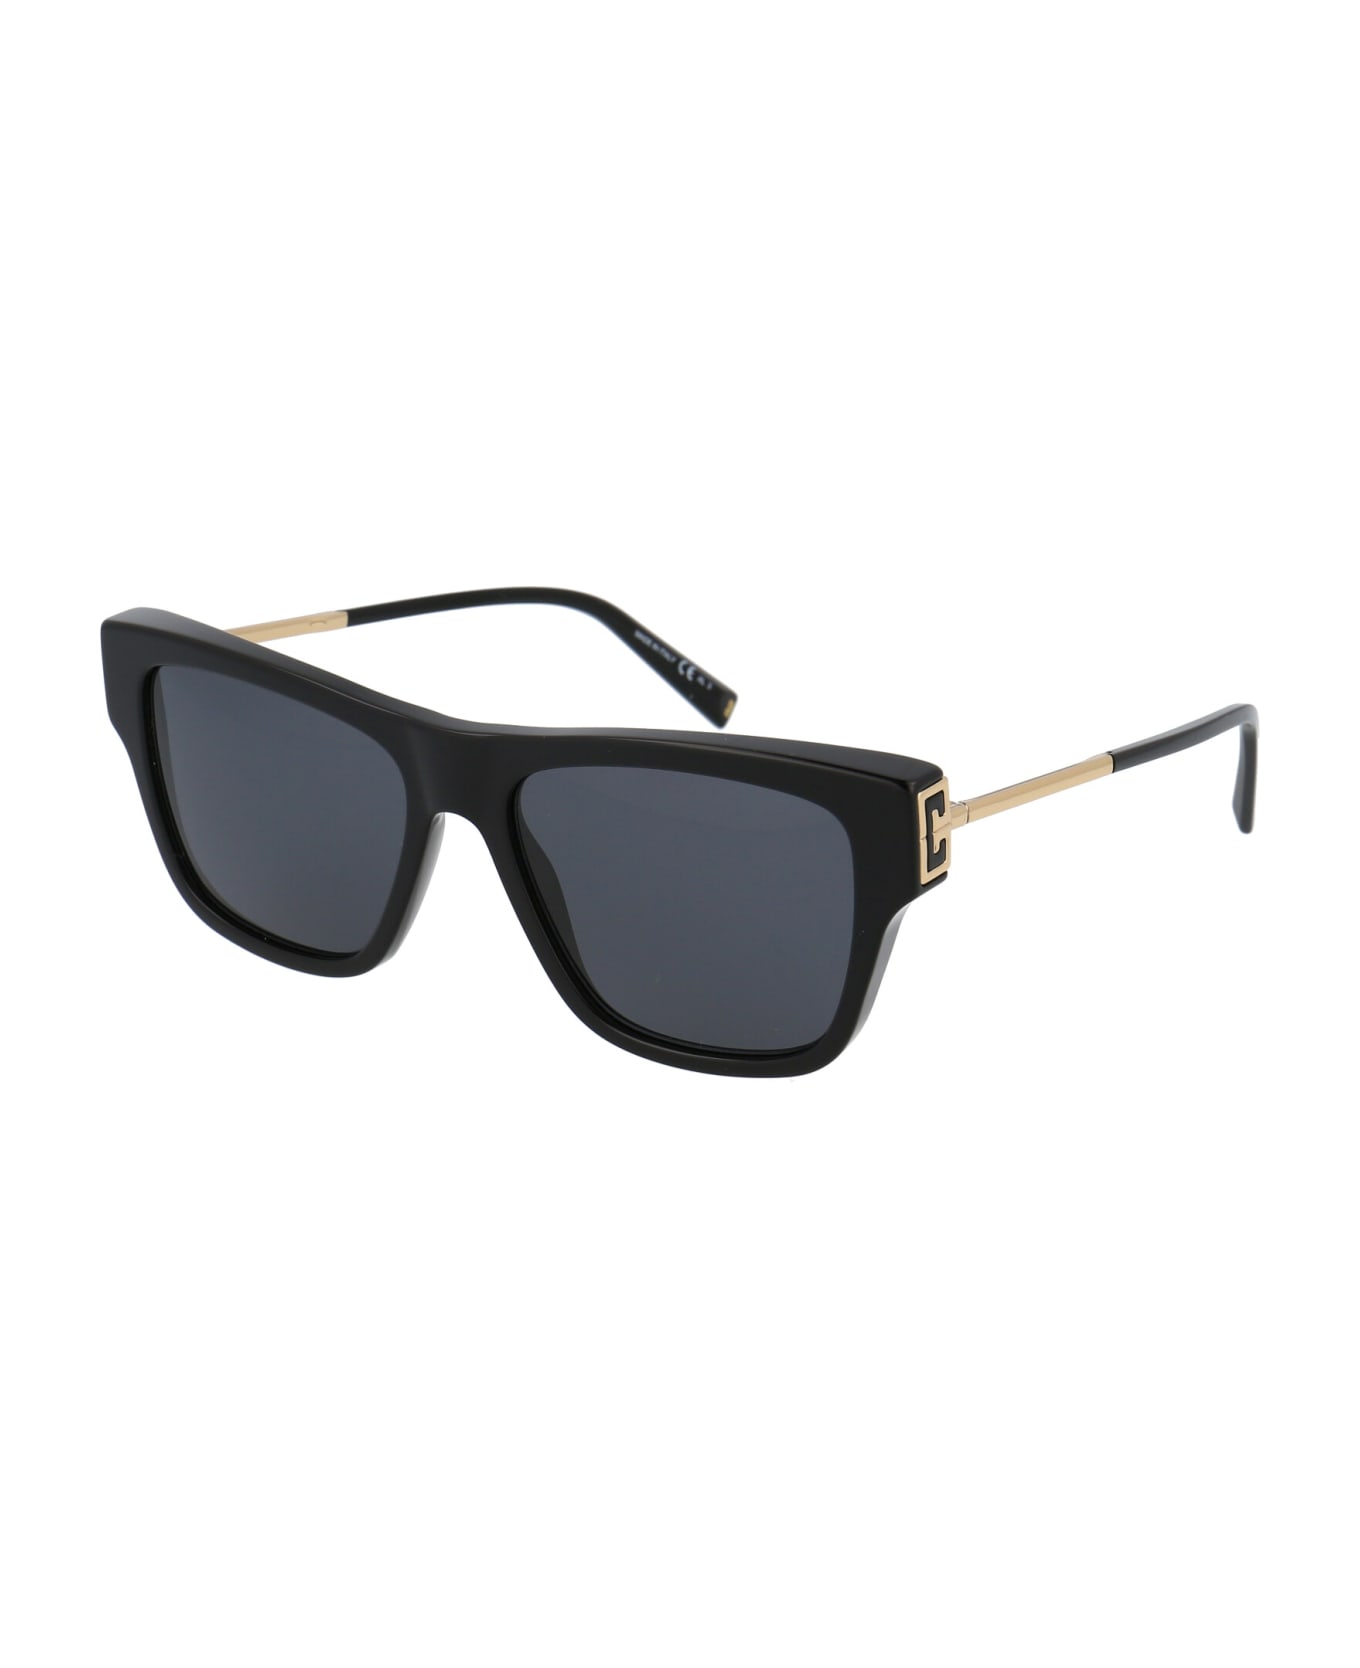 Givenchy Eyewear Gv 7190/s Sunglasses - 807IR BLACK